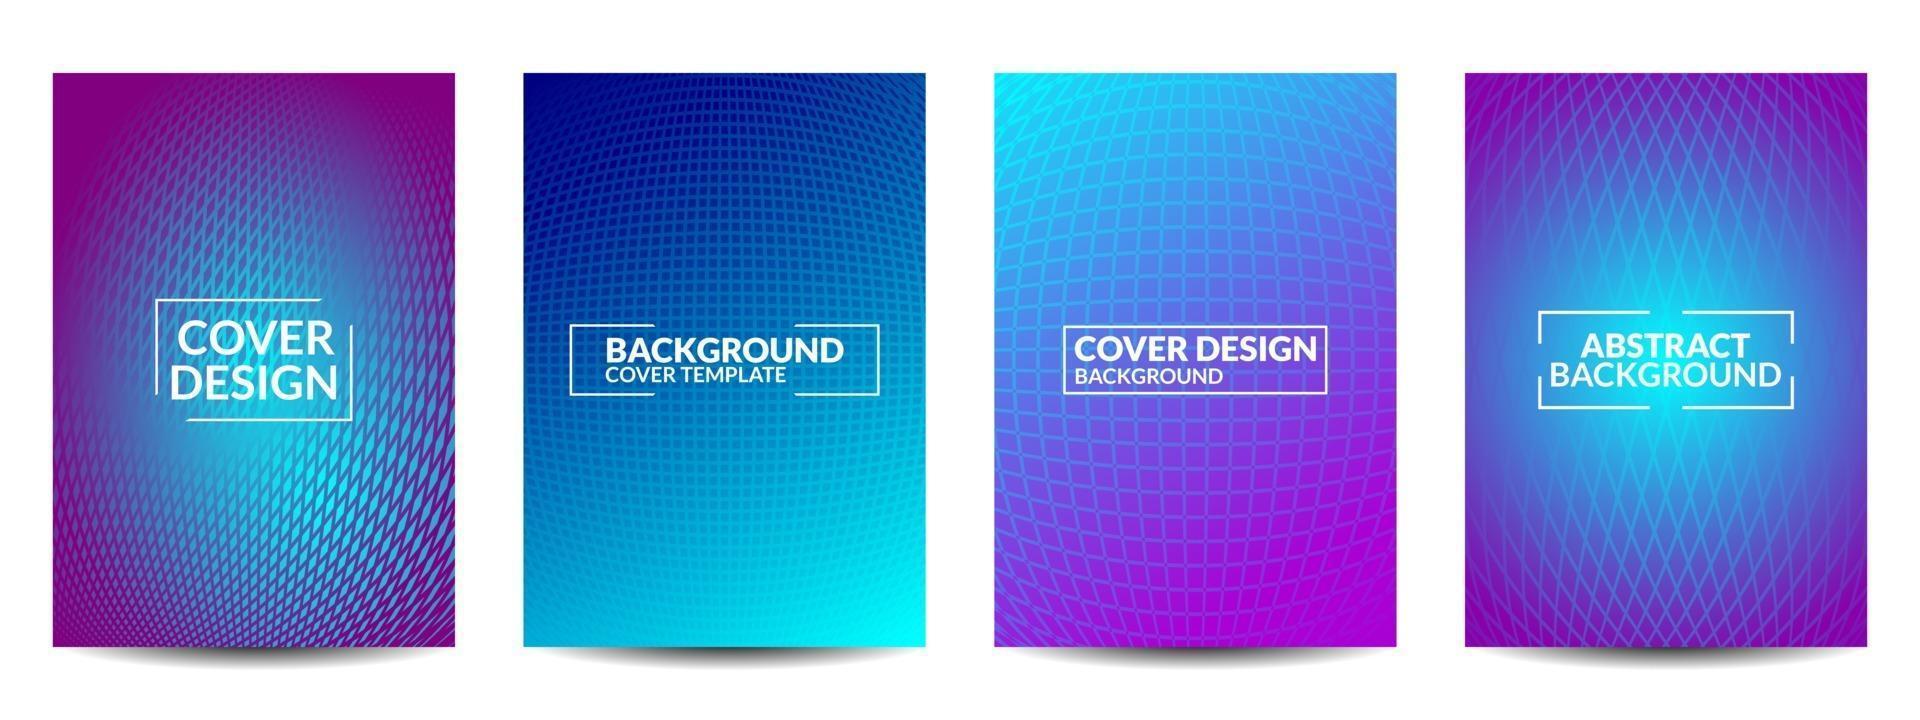 Minimal covers design vector